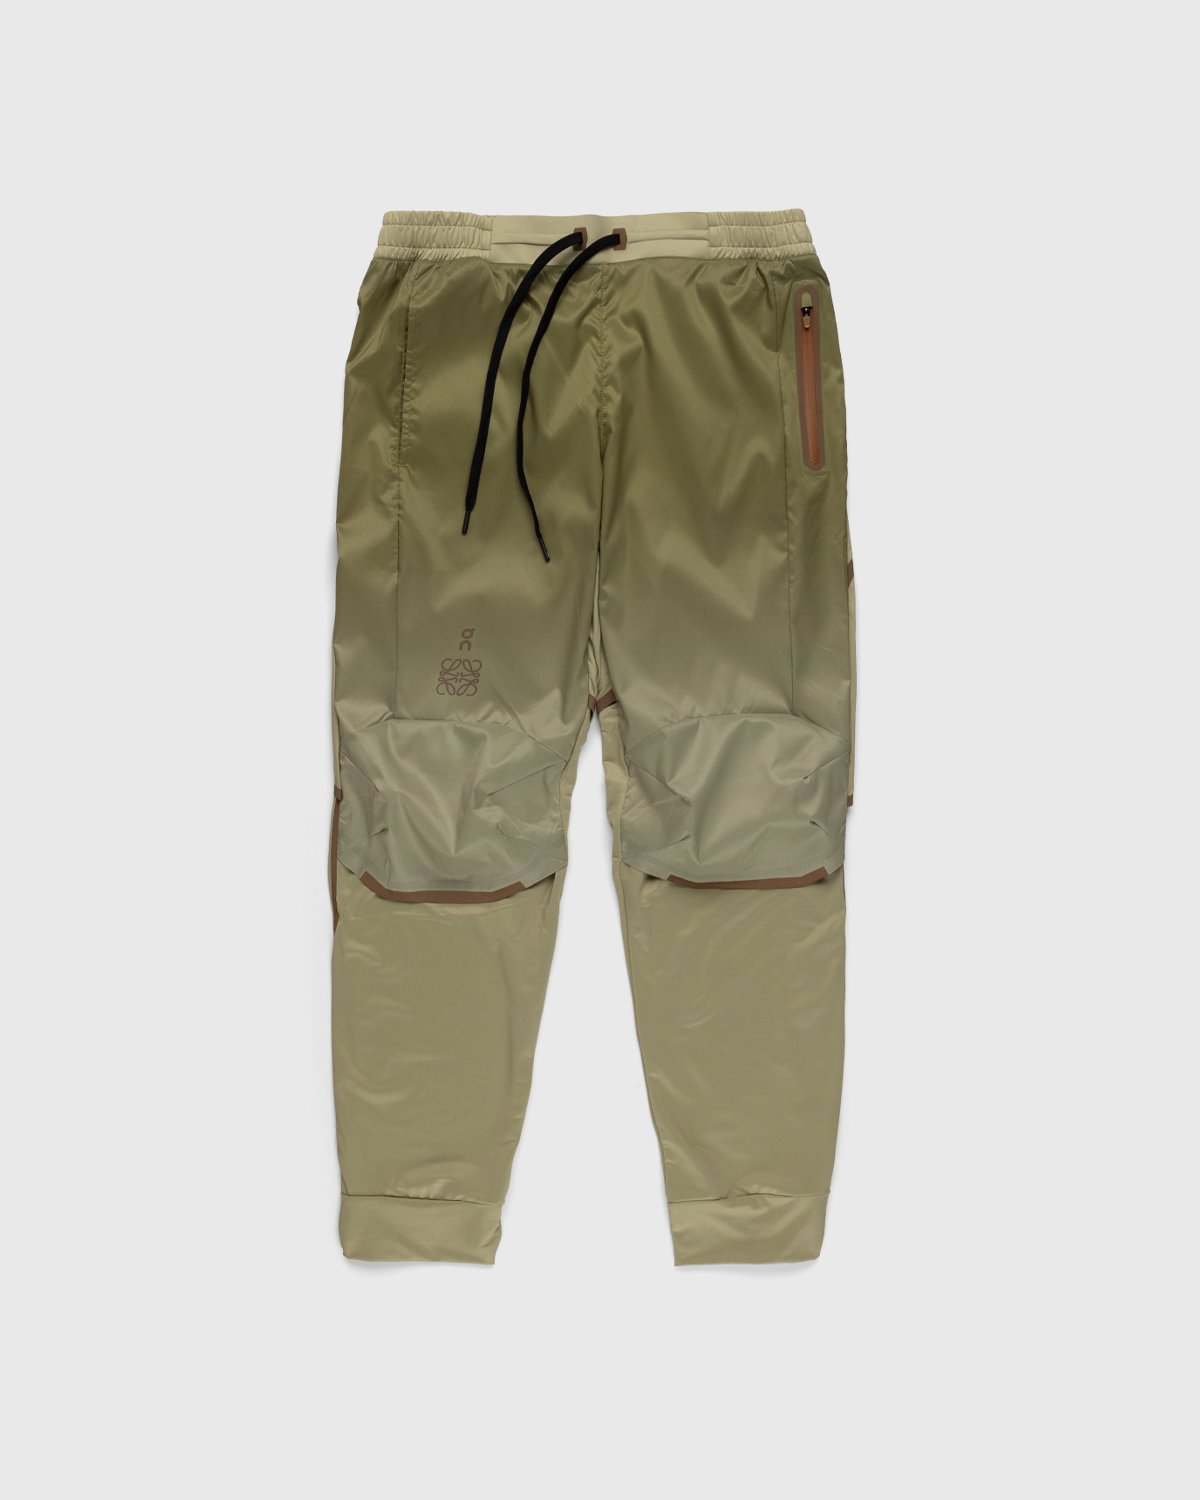 Loewe x On - Men's Technical Running Pants Gradient Khaki - Clothing - Green - Image 1